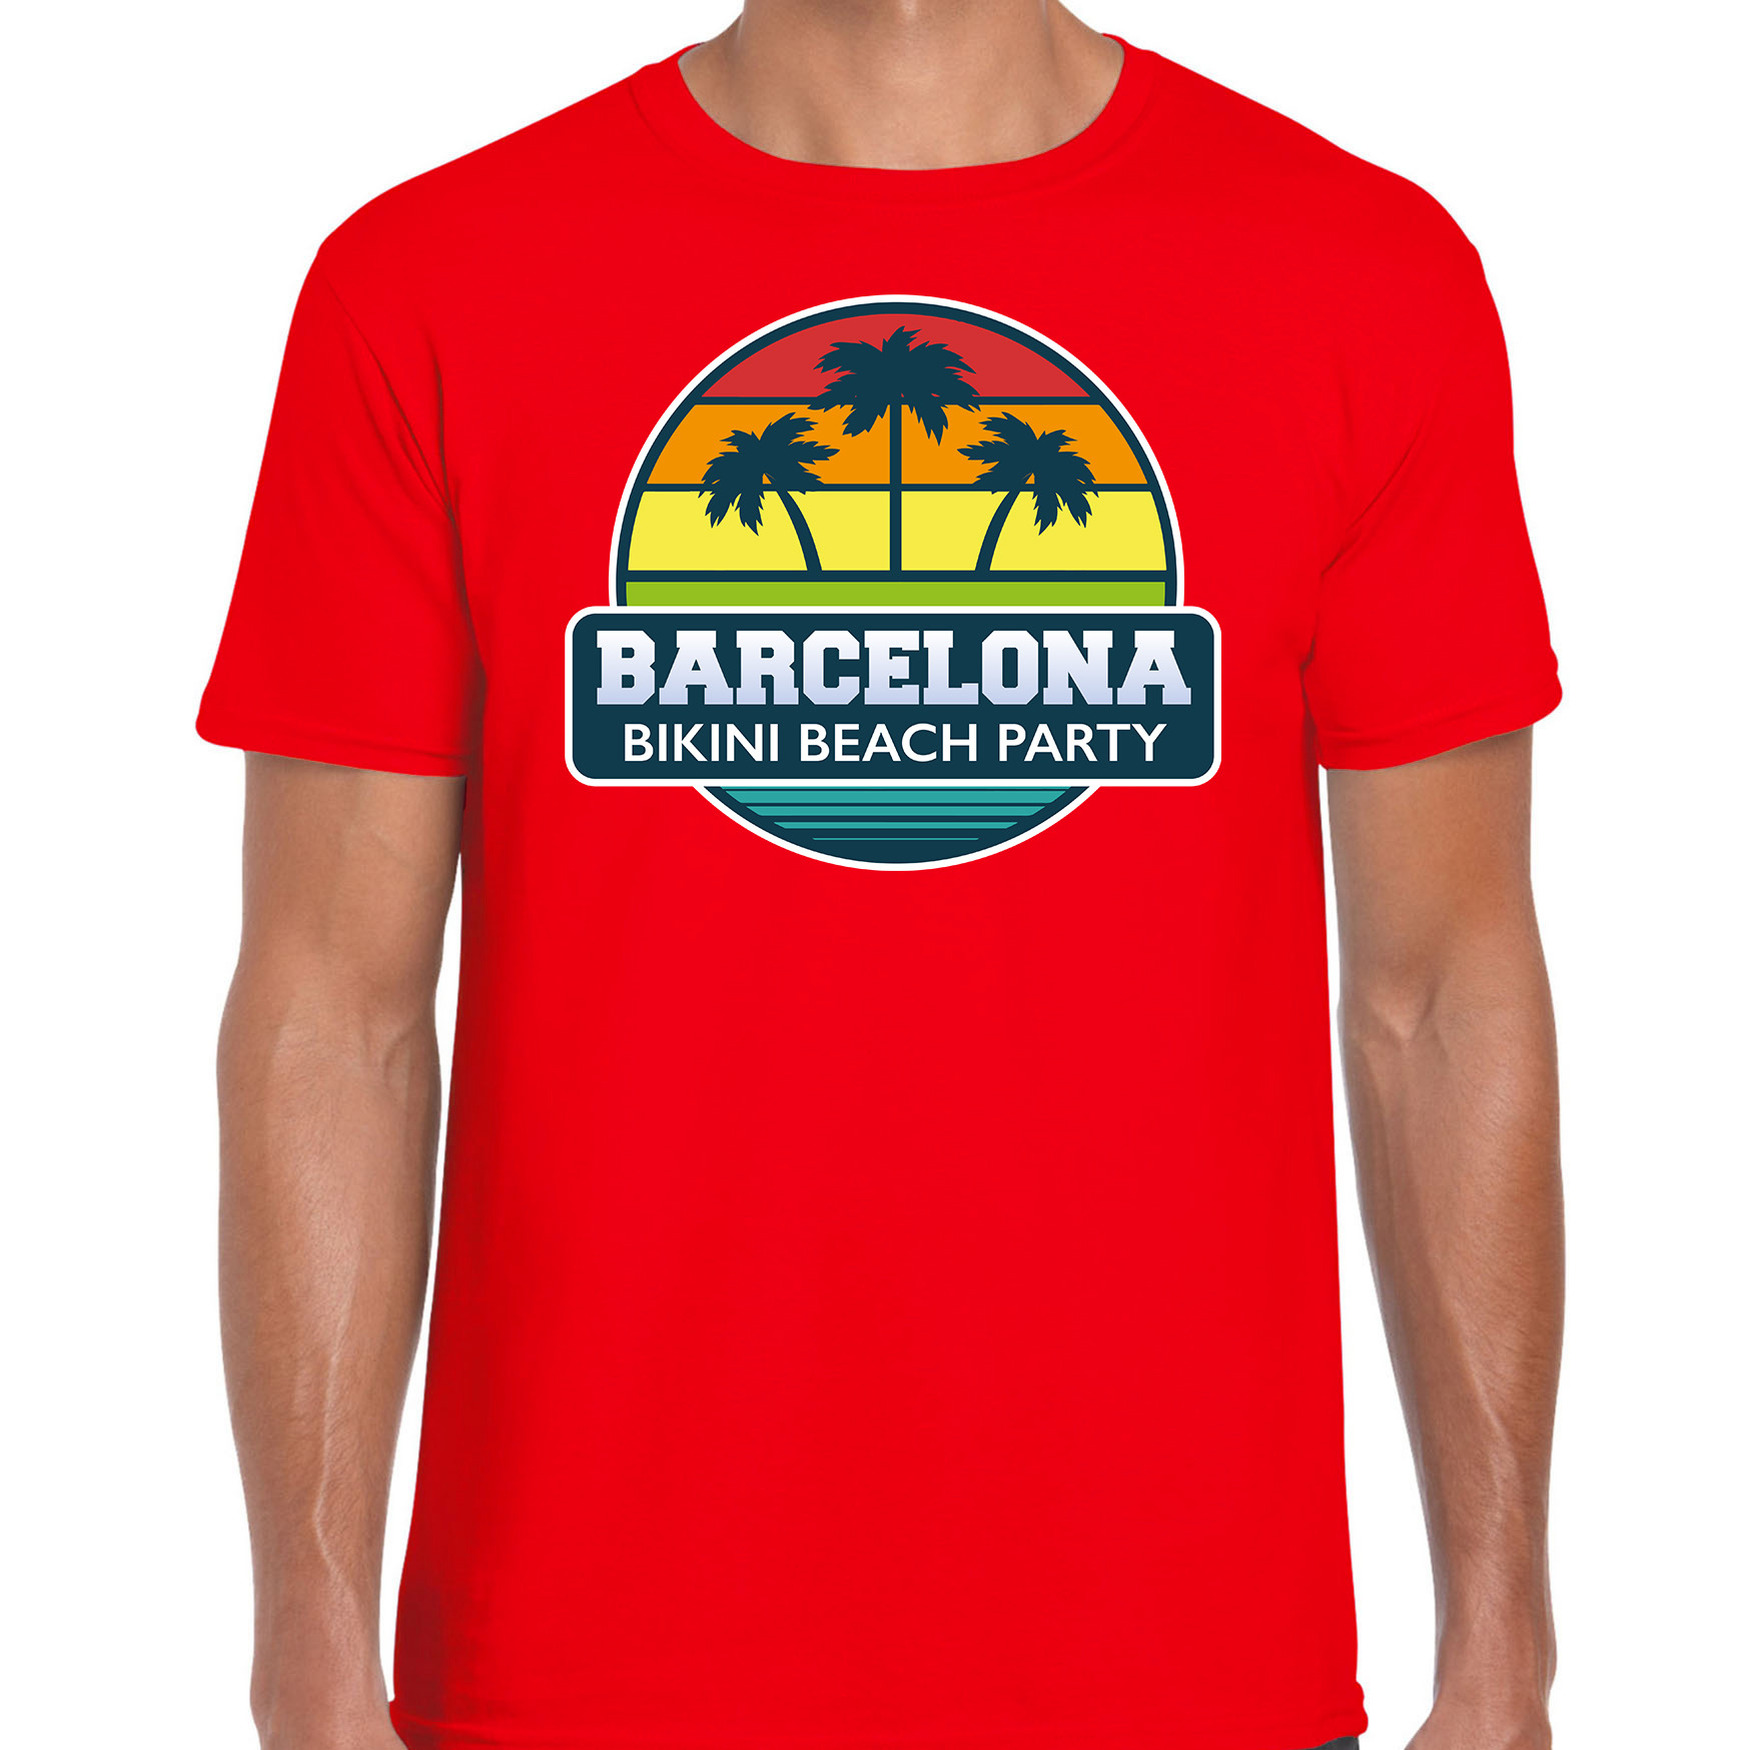 Barcelona zomer t-shirt-shirt Barcelona bikini beach party rood voor heren